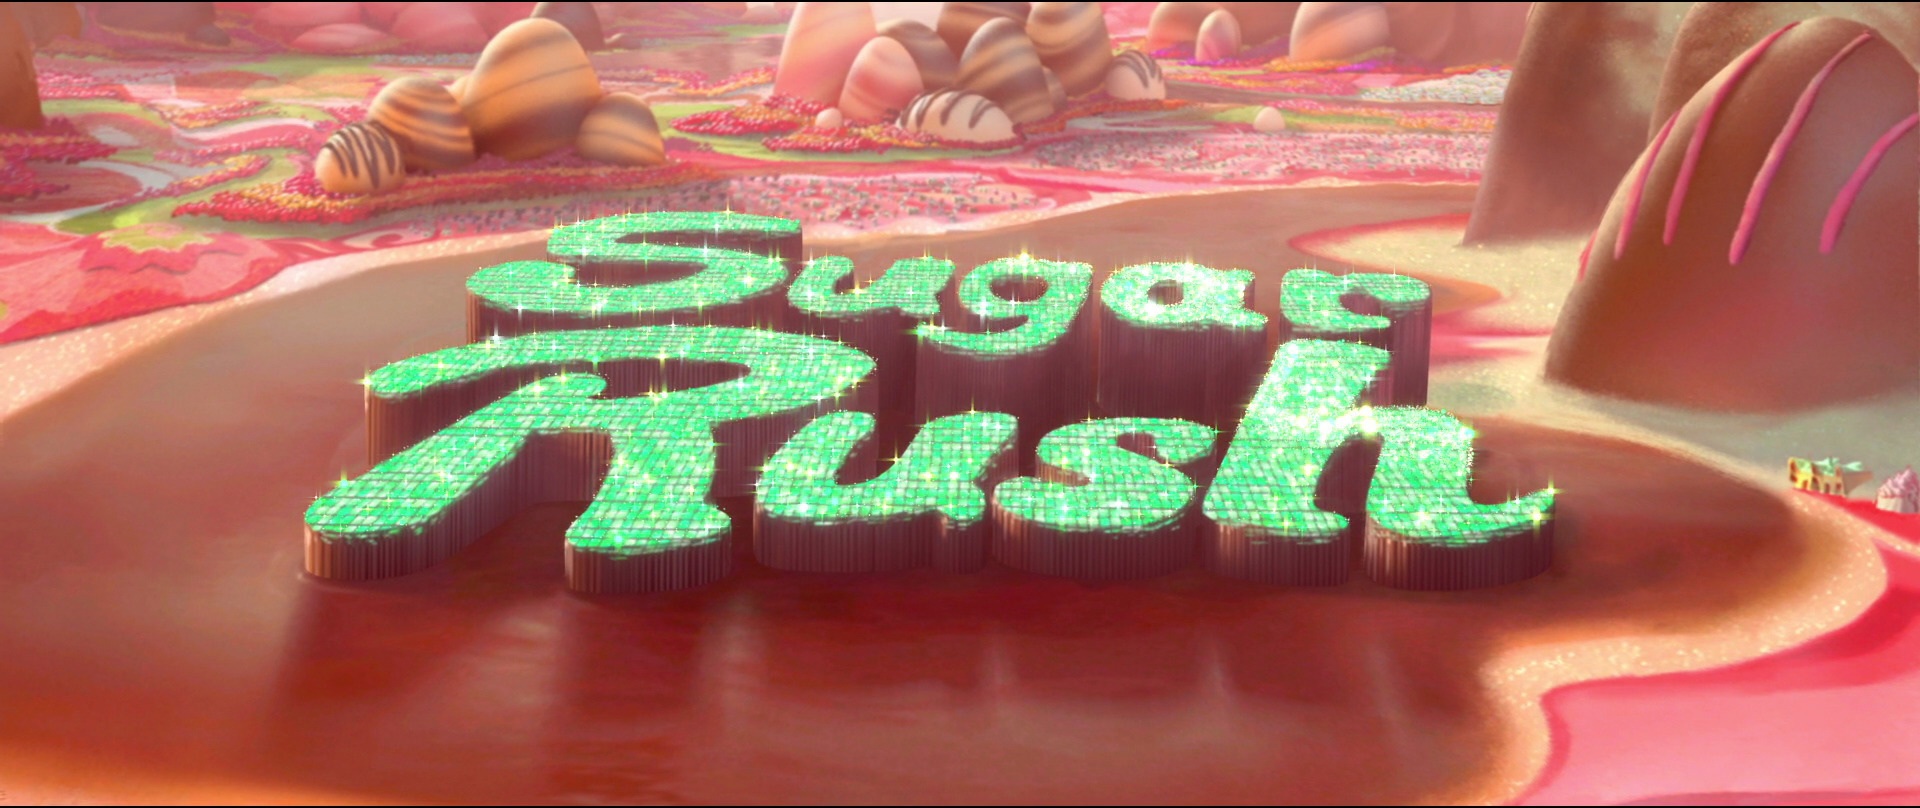 sugar rush houston